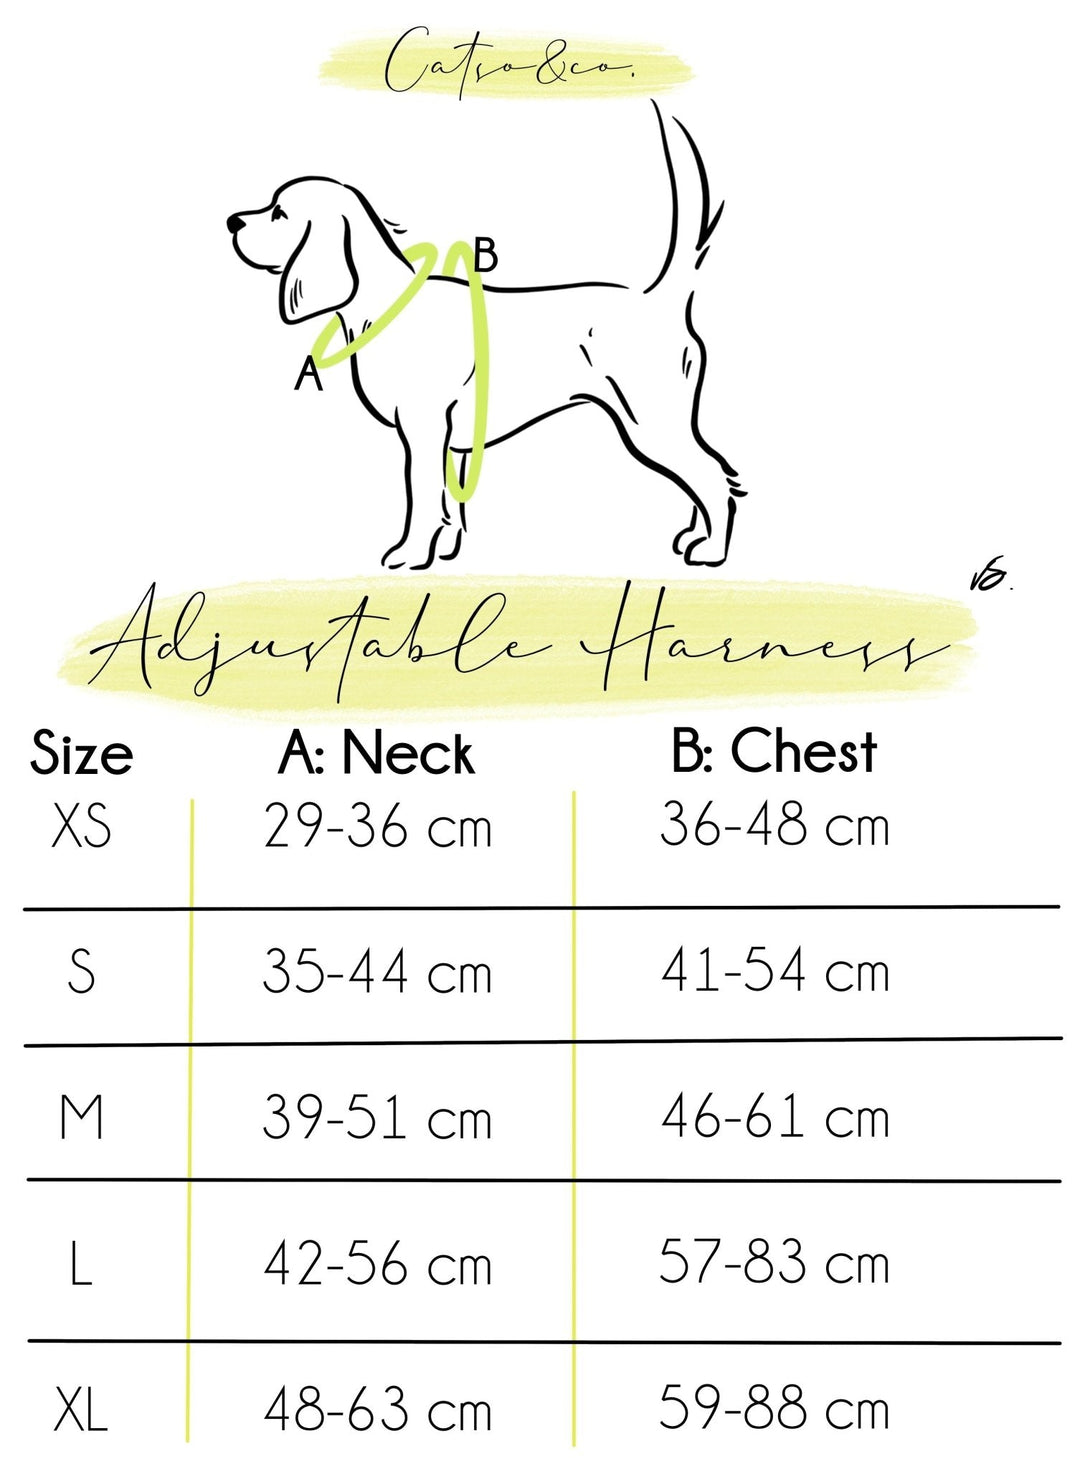 Hashtag Catso - Adjustable harness - Catso & co